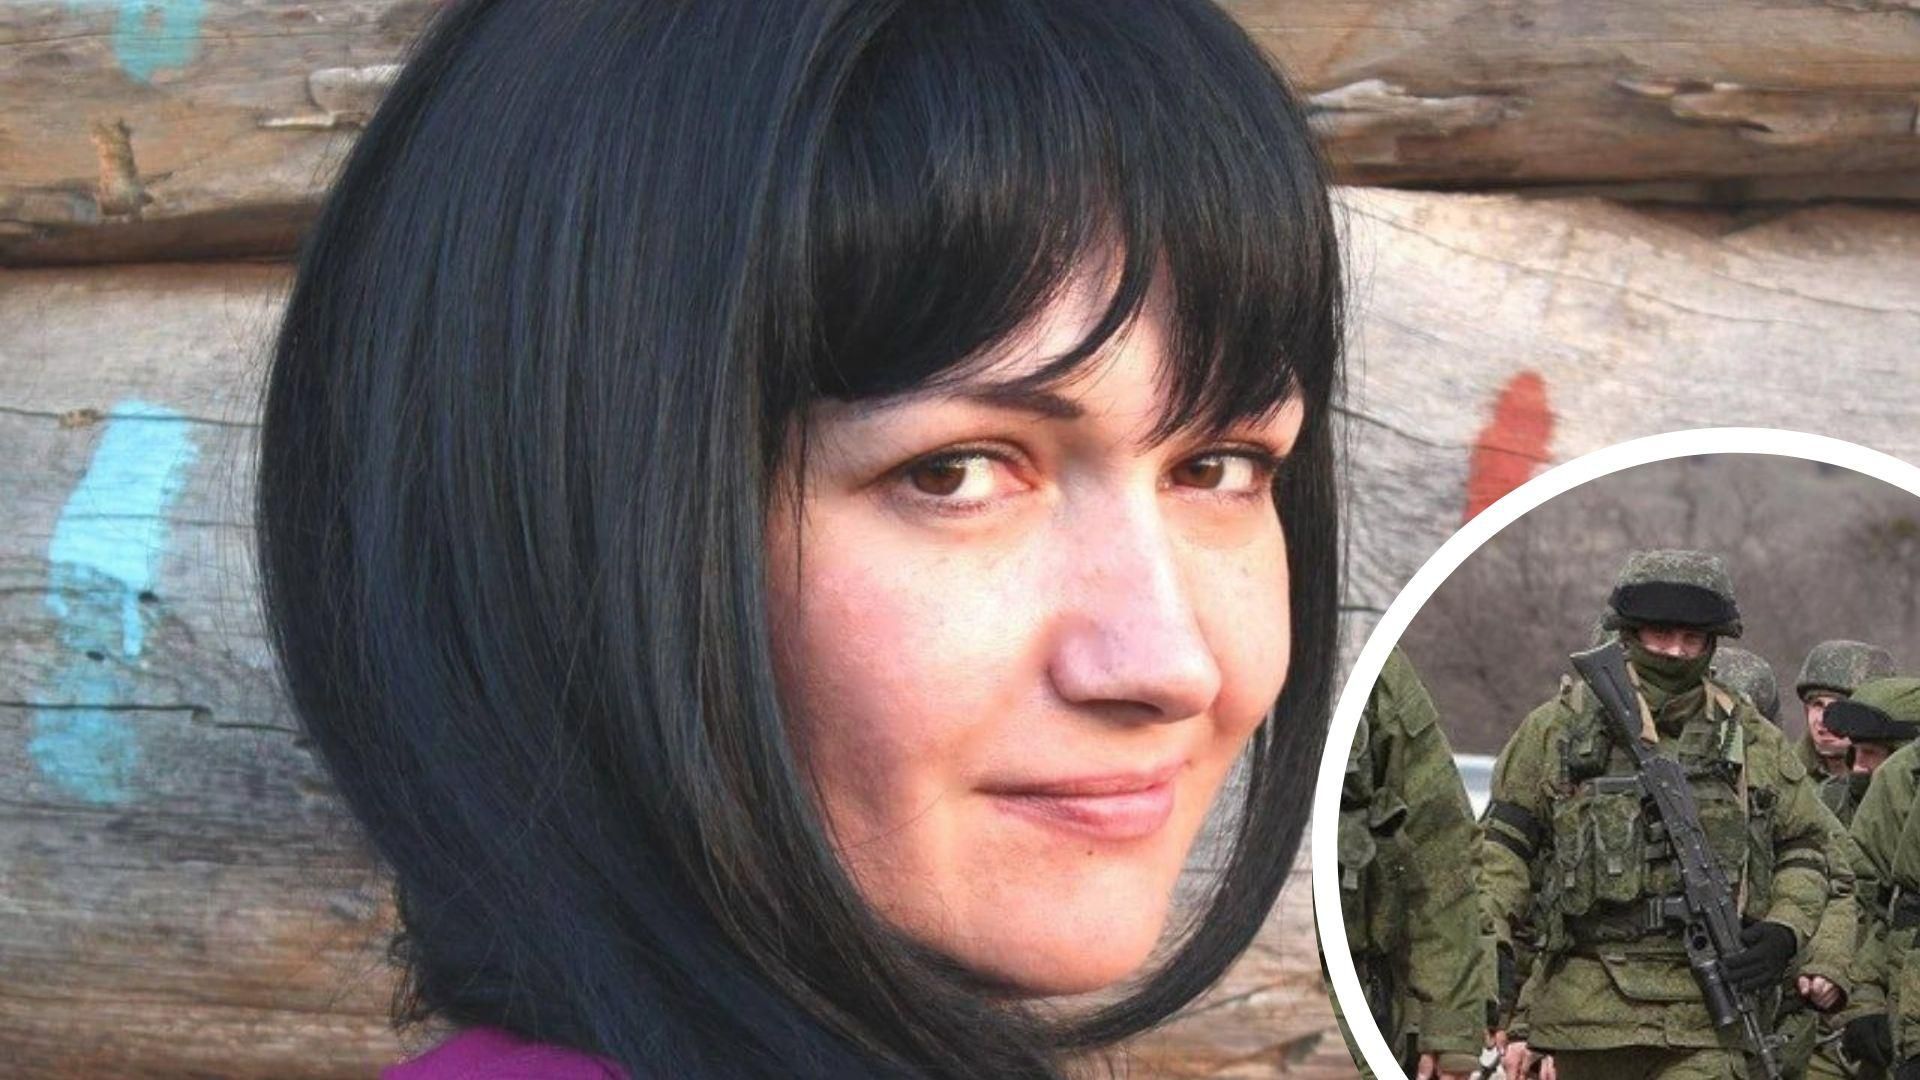 В Крыму россияне похитили журналистку Ирину Данилович